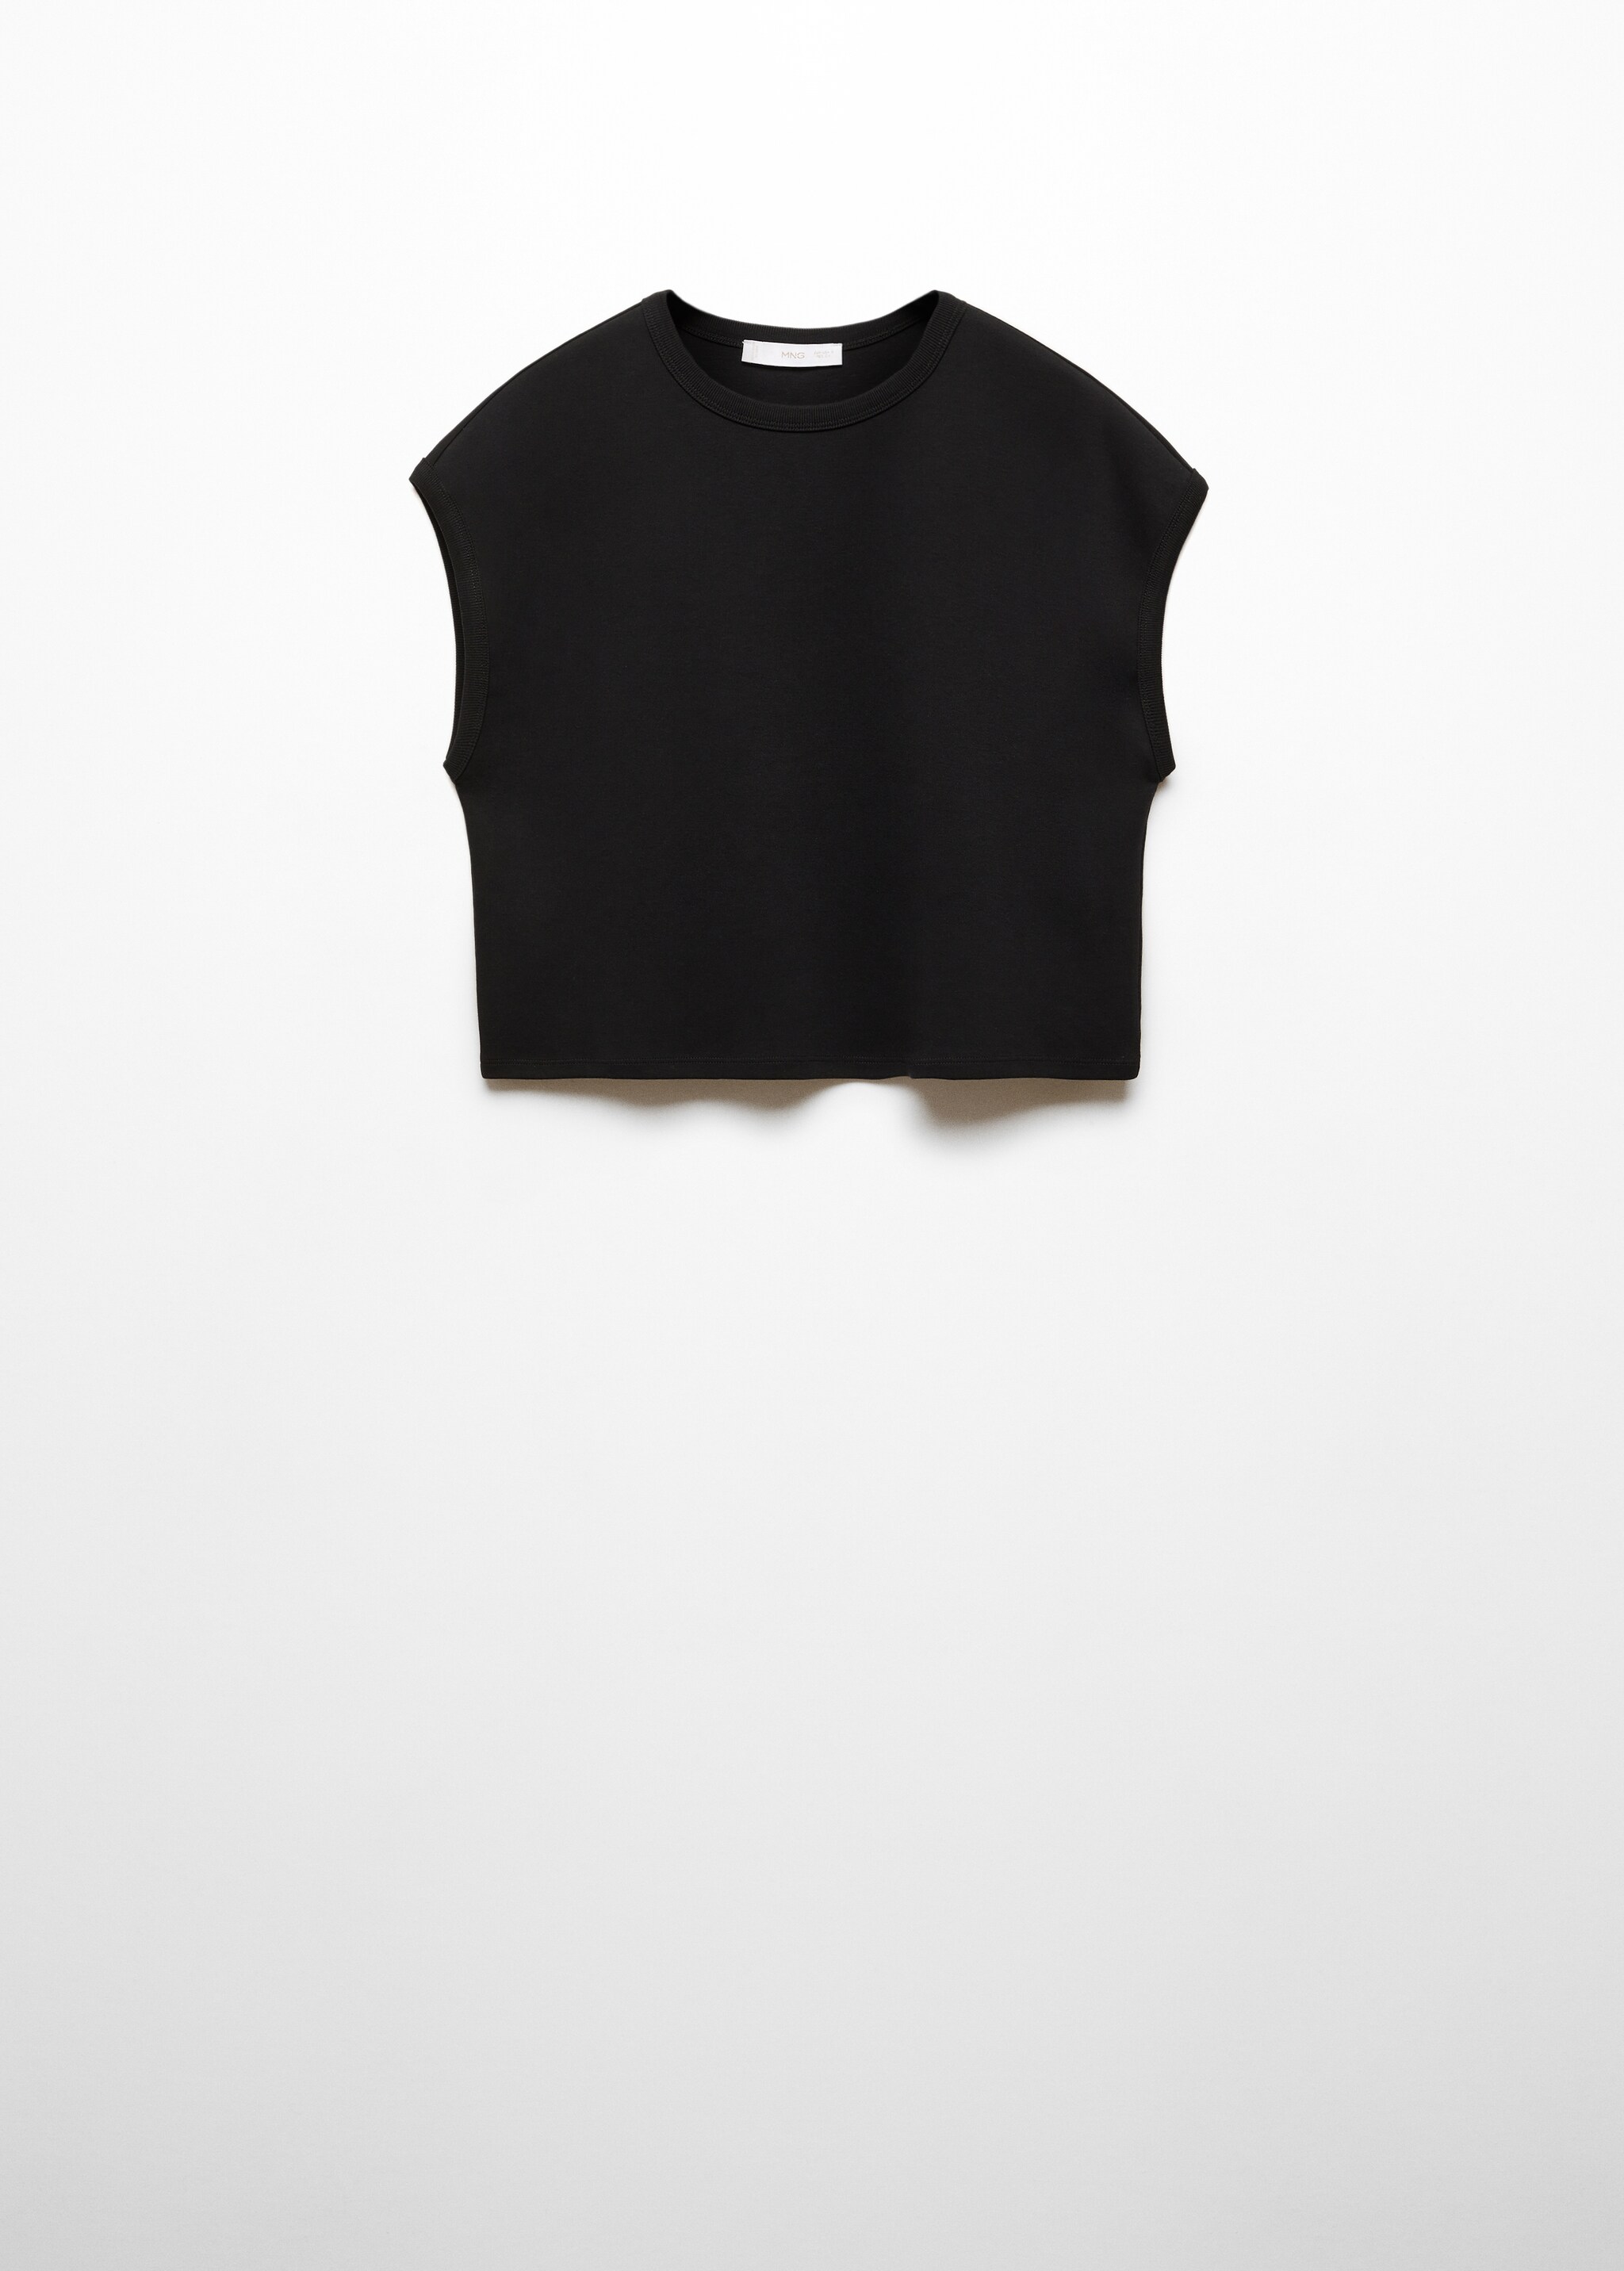 Cotton sleeveless t-shirt - Articol fără model